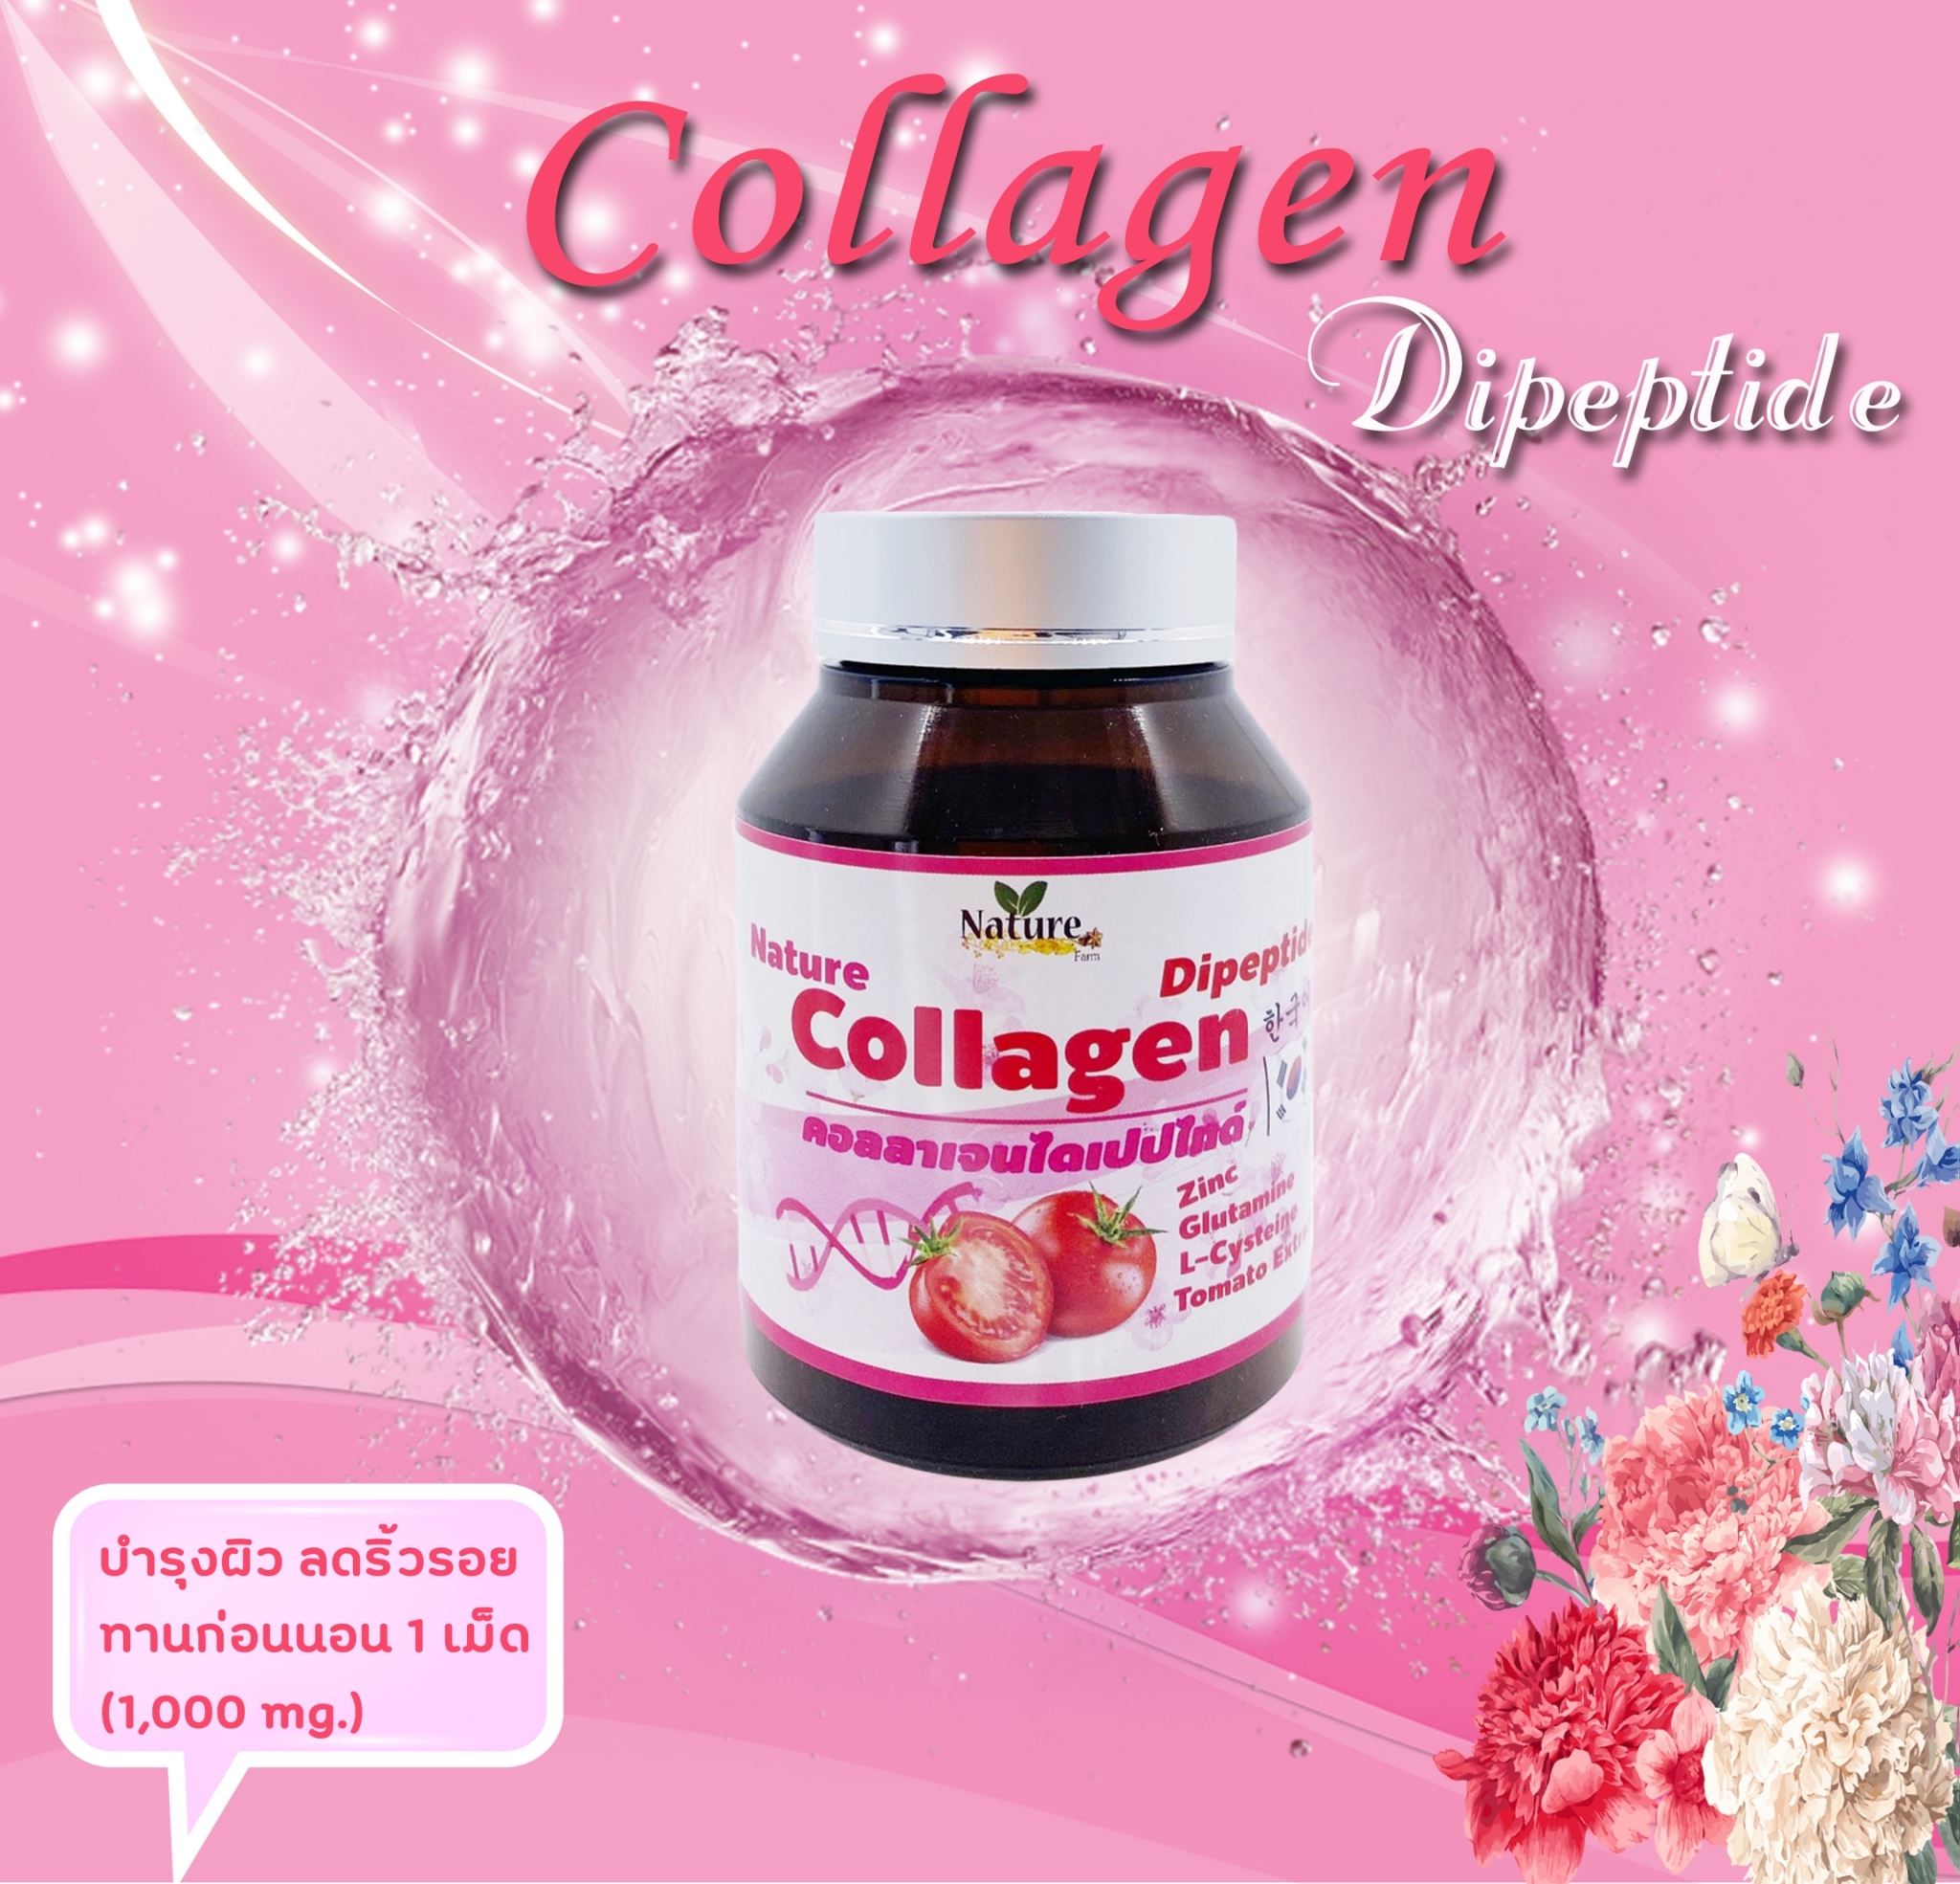 Nature Collagen Dipeptide เนเจอร์ คอลลาเจน